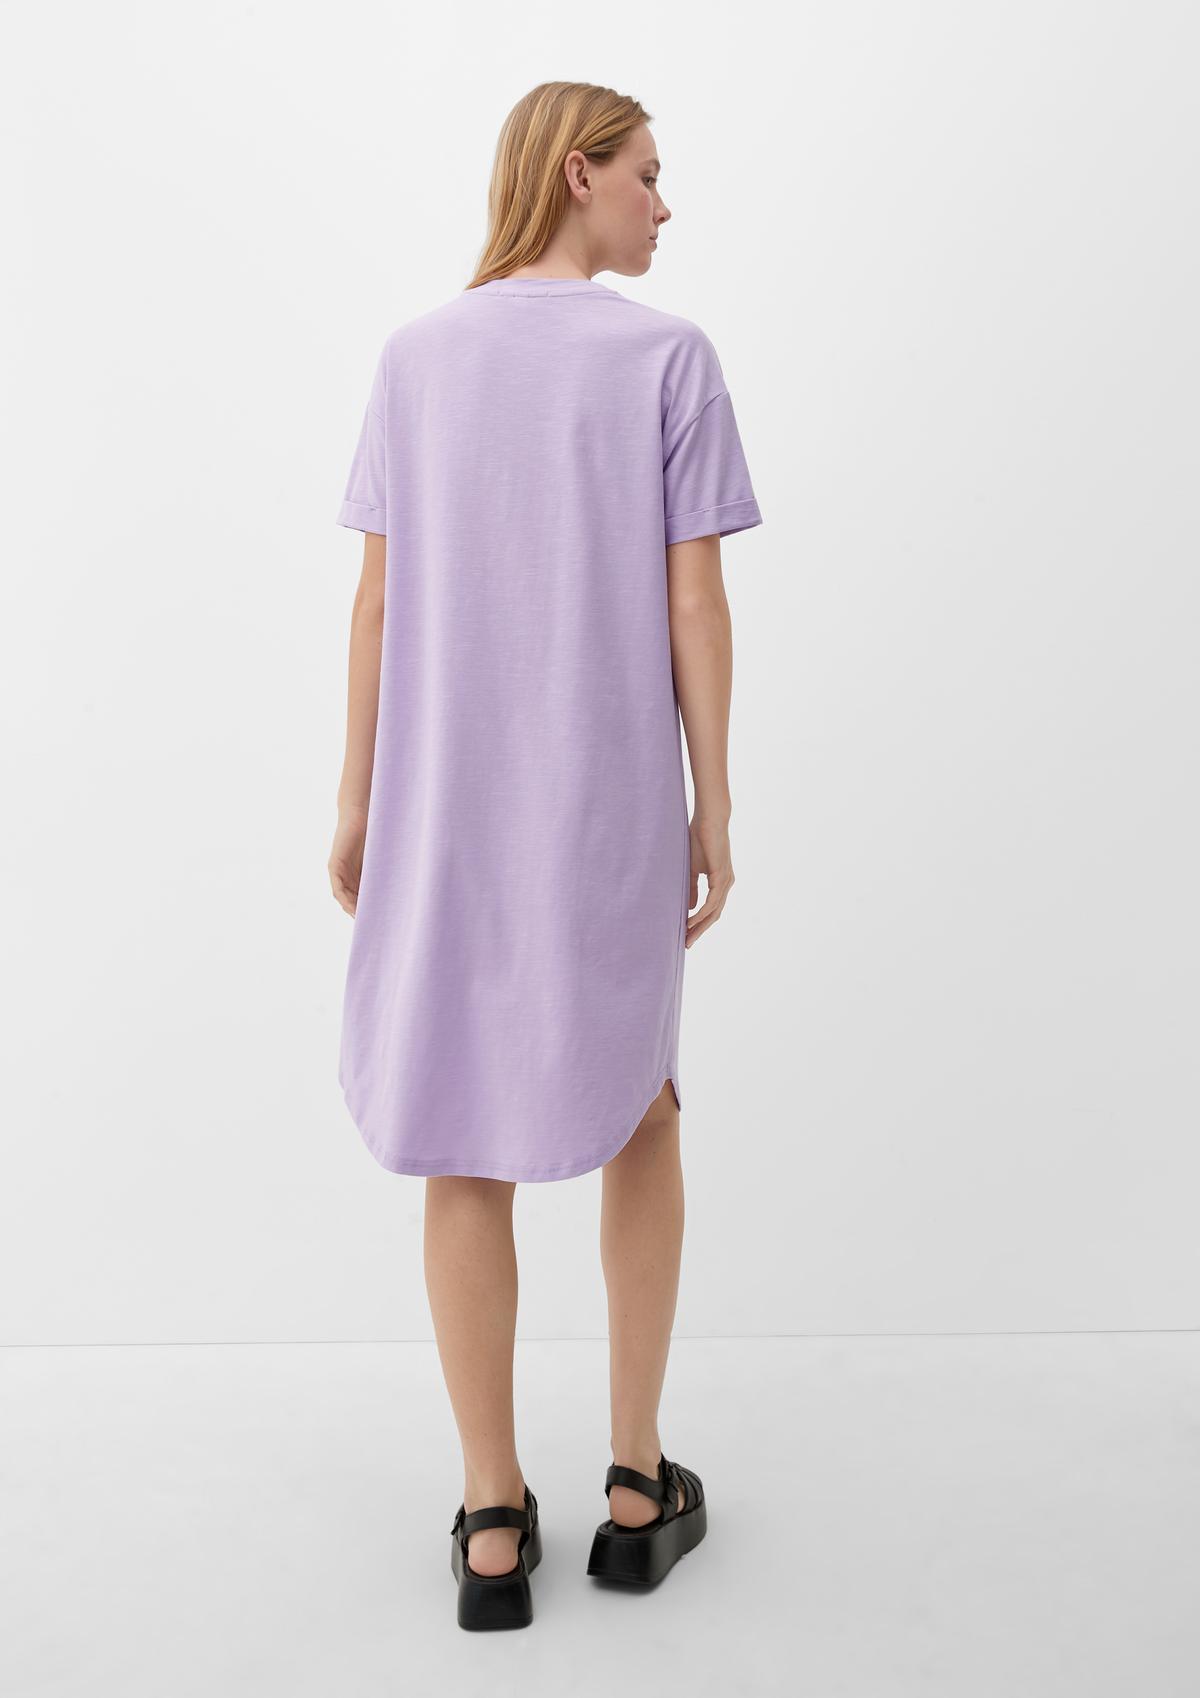 s.Oliver Shirt dress with slub yarn texture